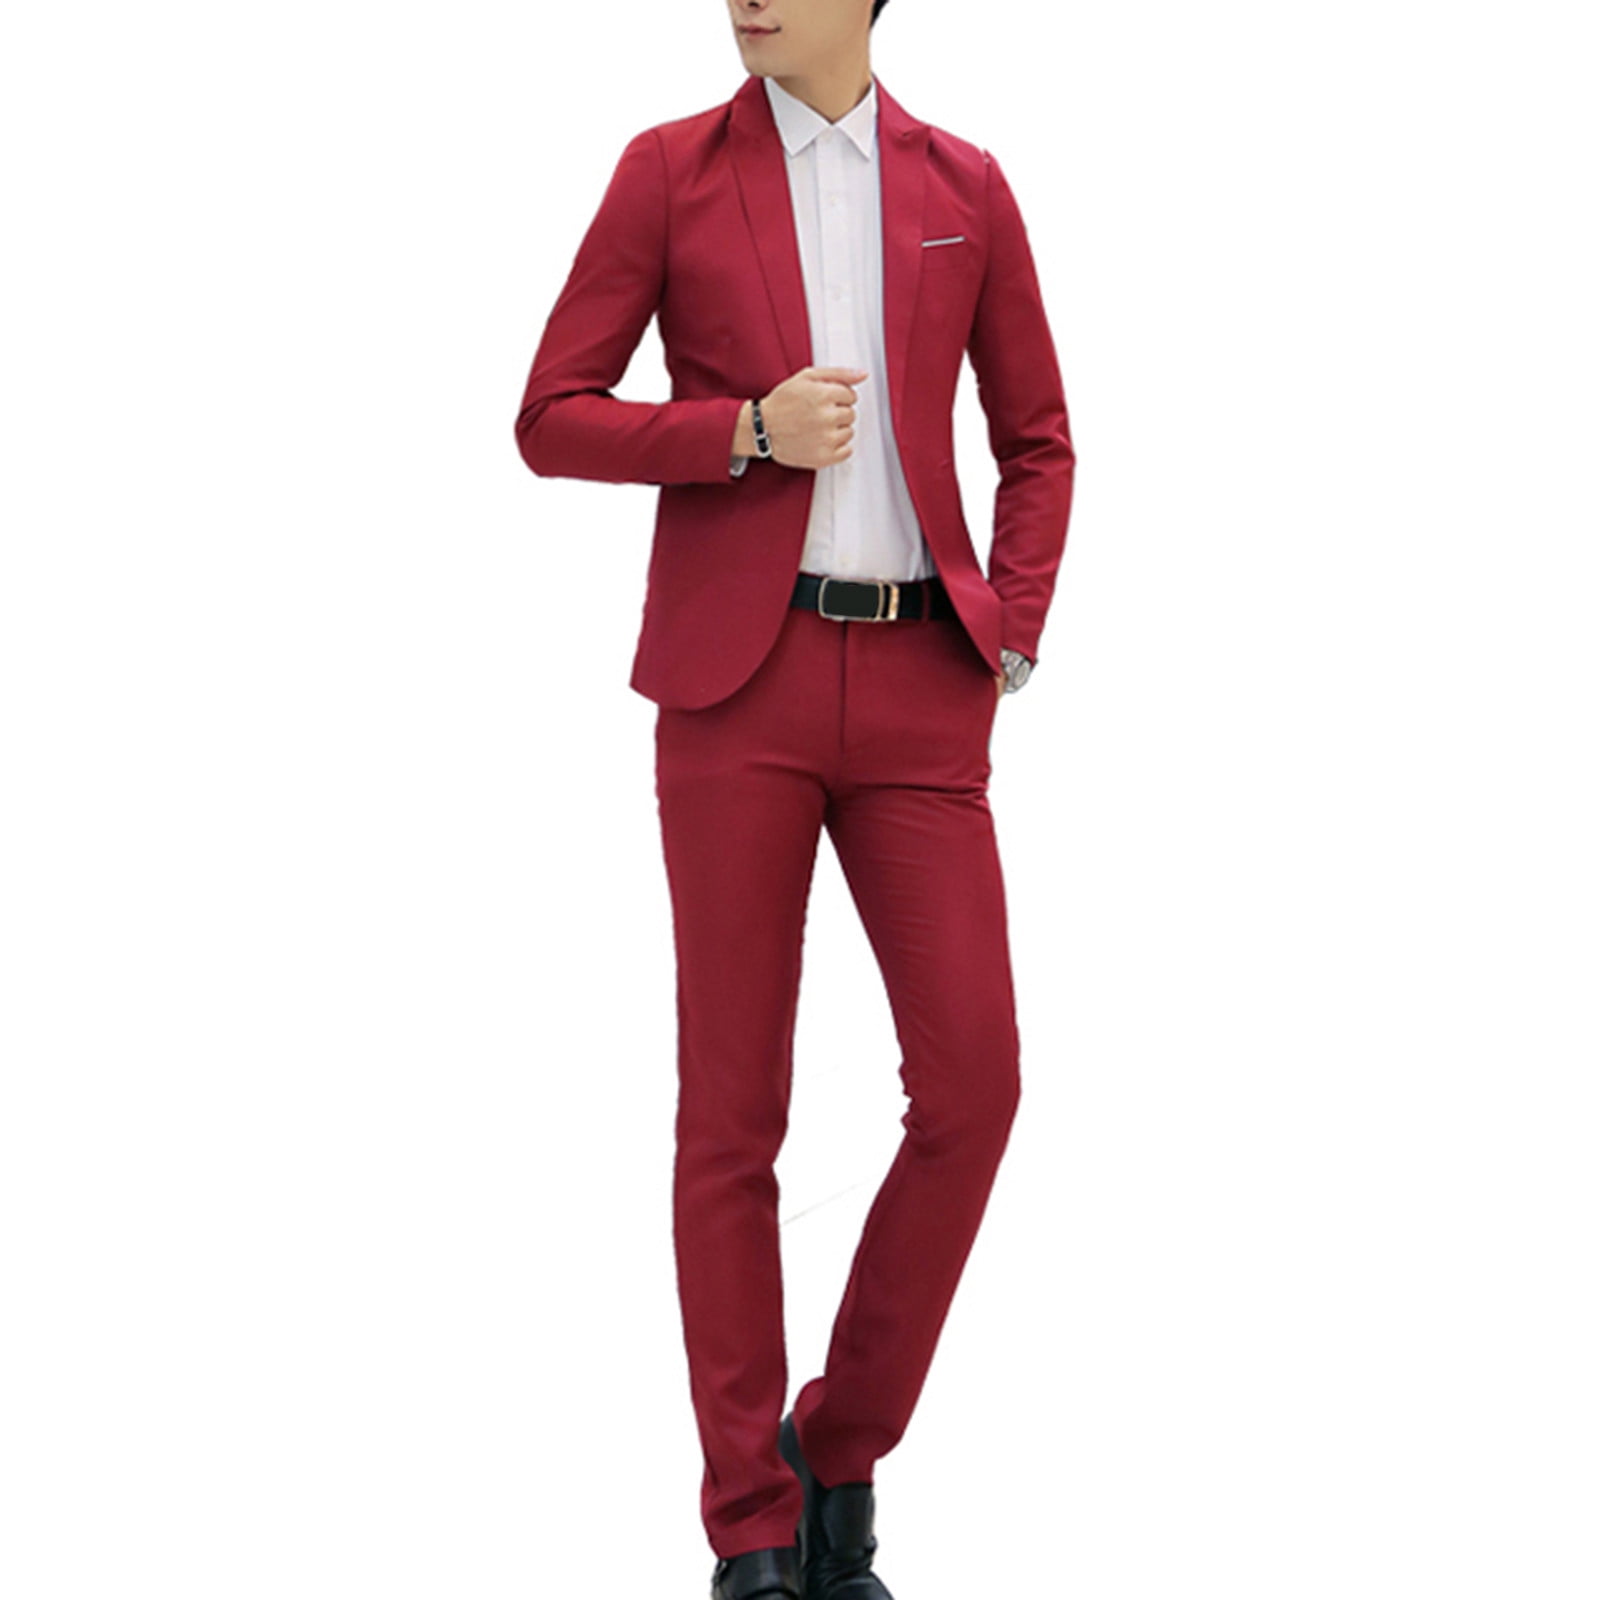 YYDGH On Clearance Men's Suits 3 Piece Slim Fit Suit Set,One Button Wedding  Business Tuxedo Solid Blazer Jacket Vest Pants(wine,3XL) 